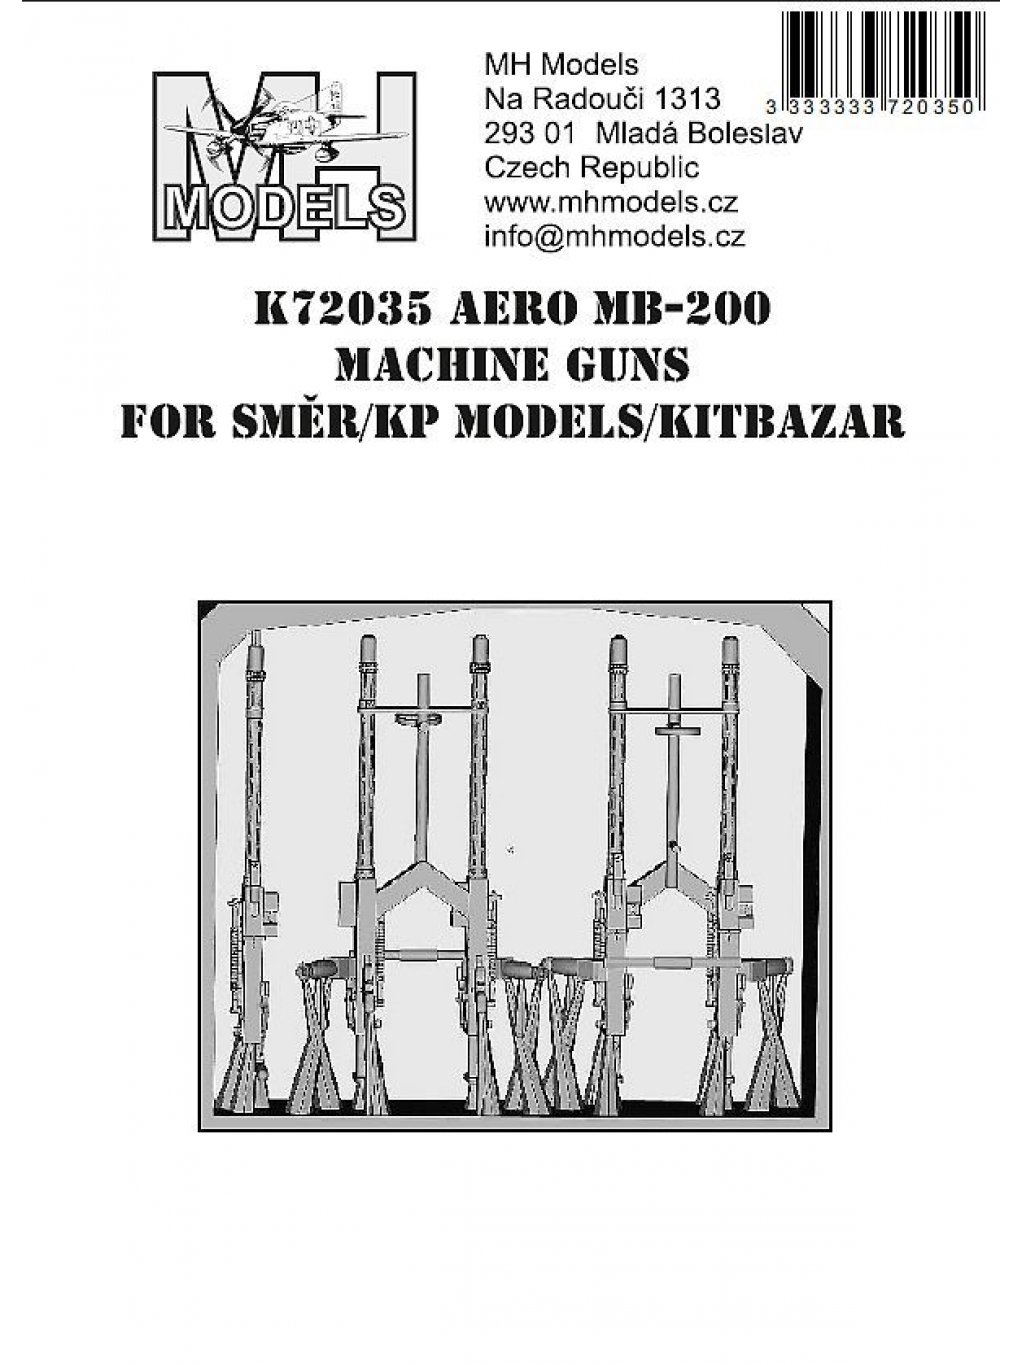 Aero MB-200 machine guns vz.30 for Směr//KP Models/Kitbazar